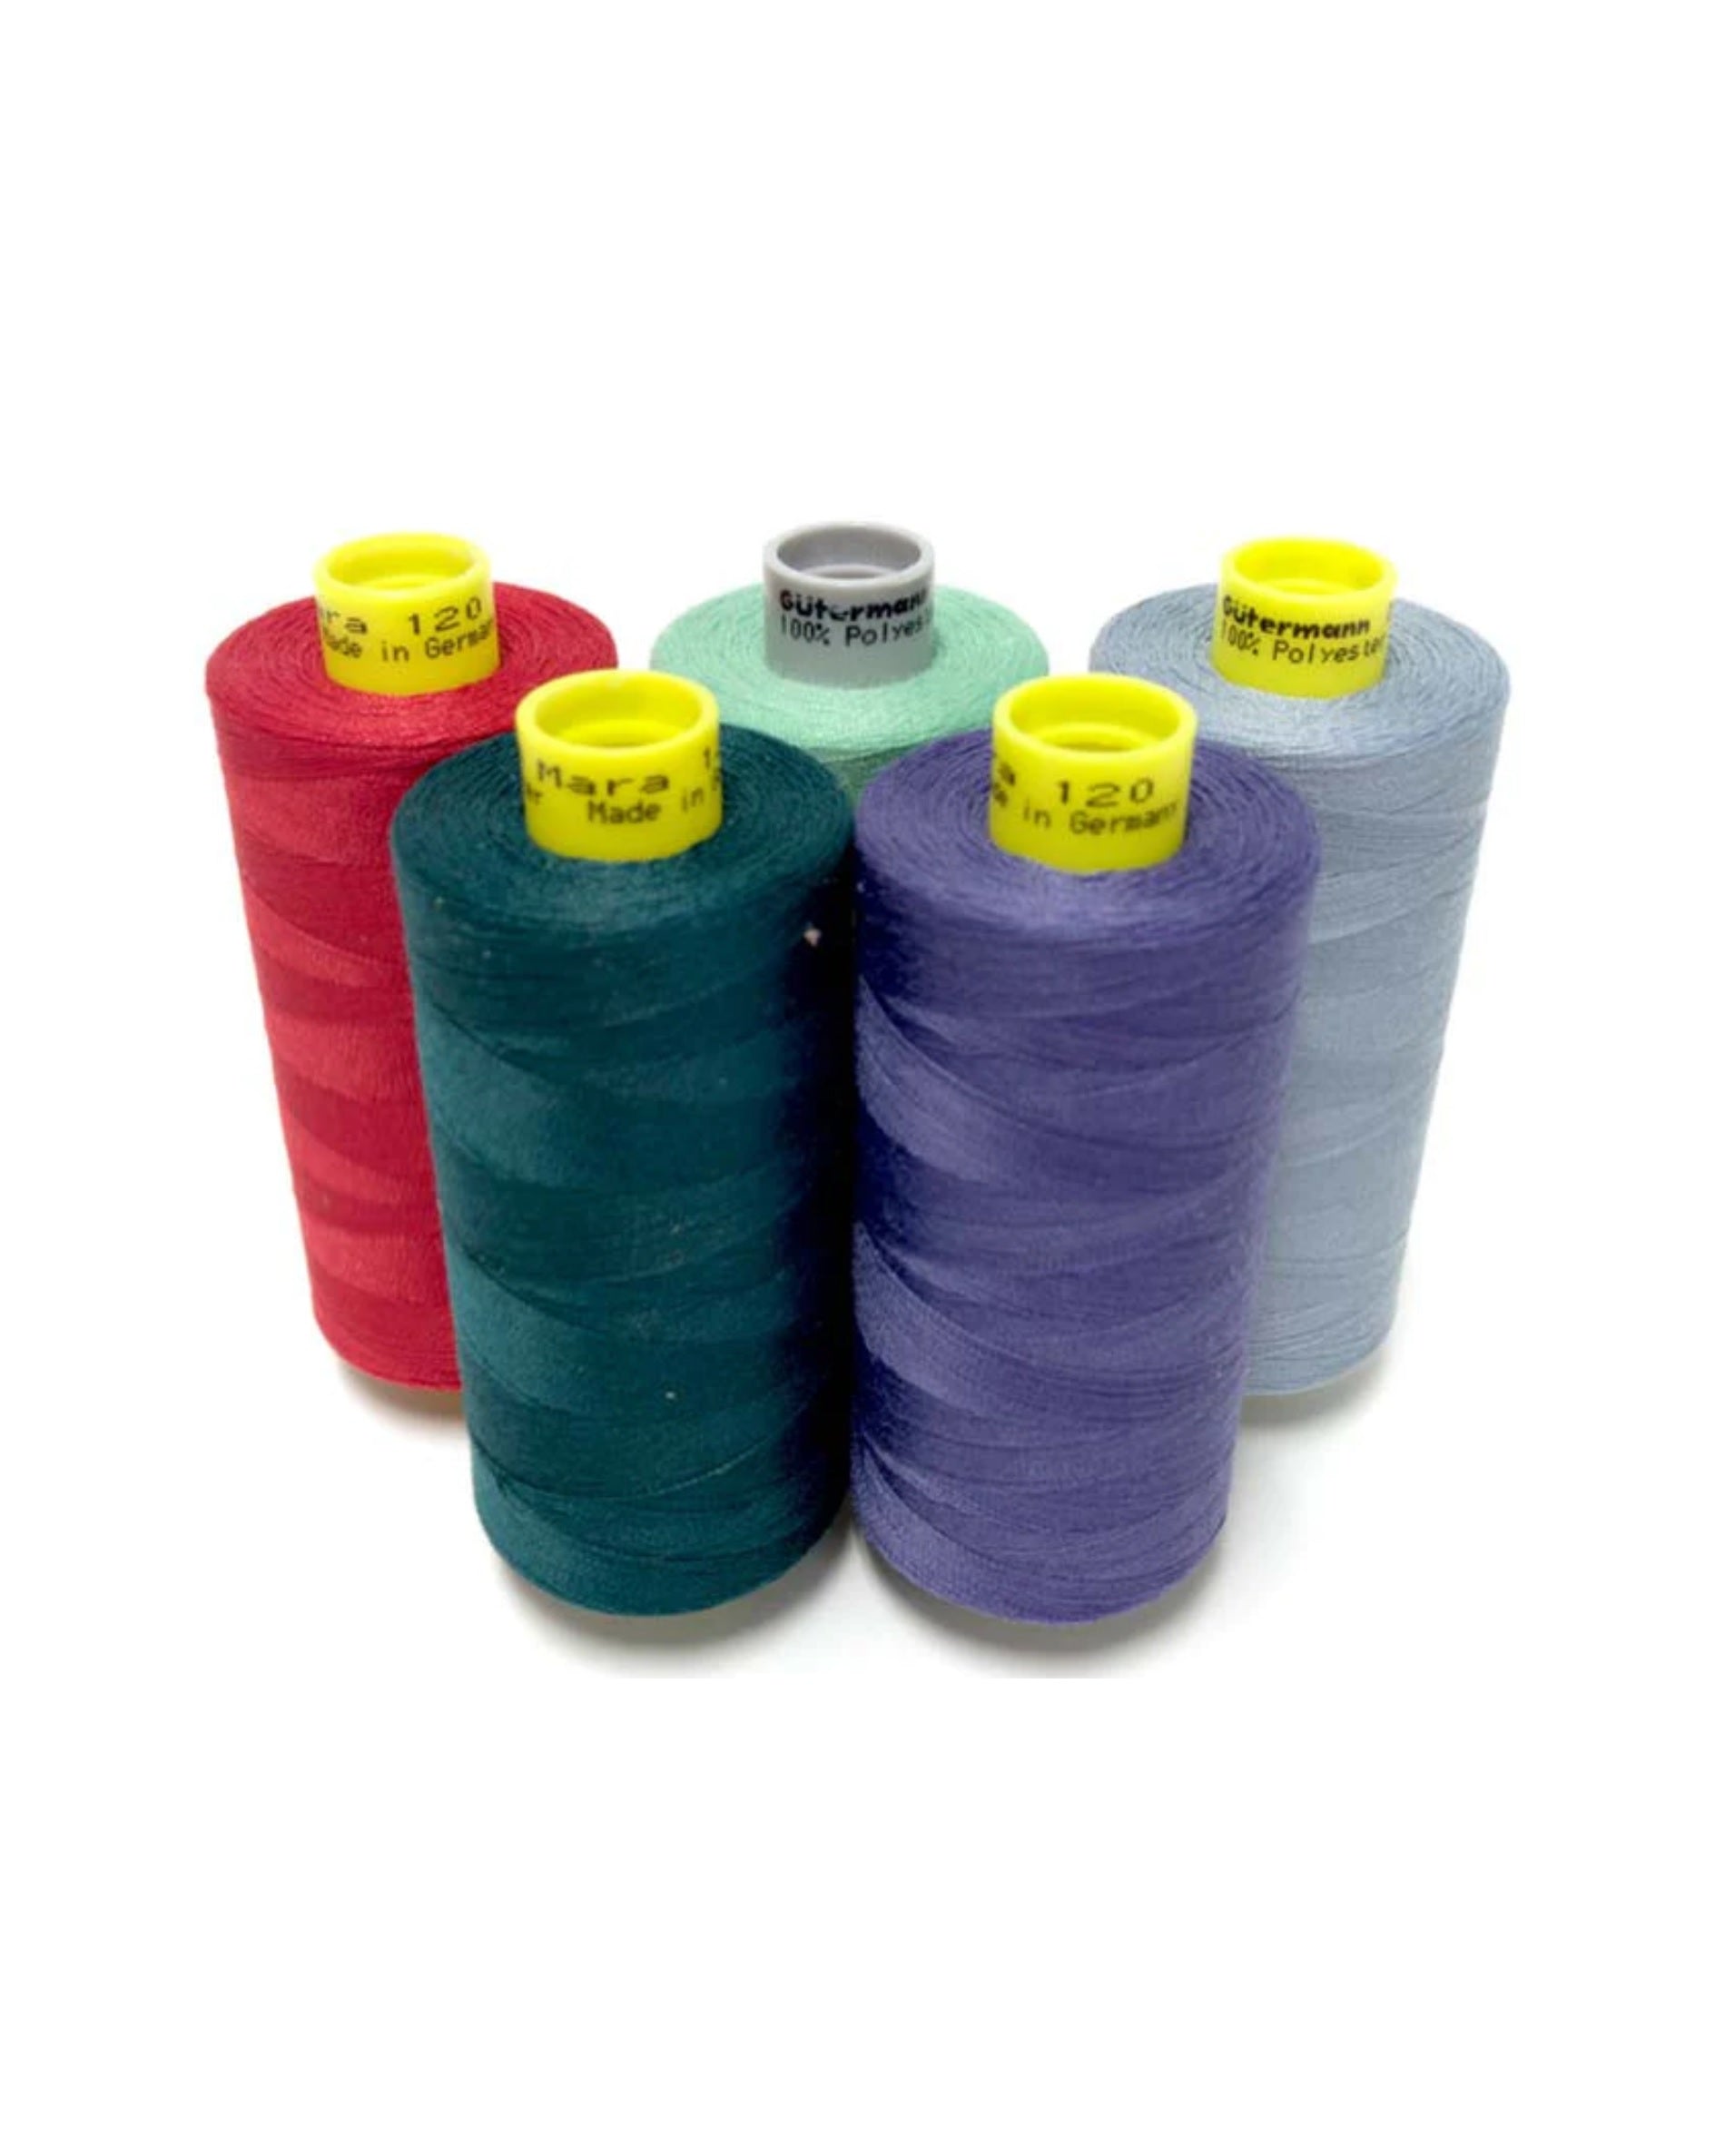 1500-9999 Colours Gutermann Mara 120 Polyester Sew All Thread 1000m/1093yds